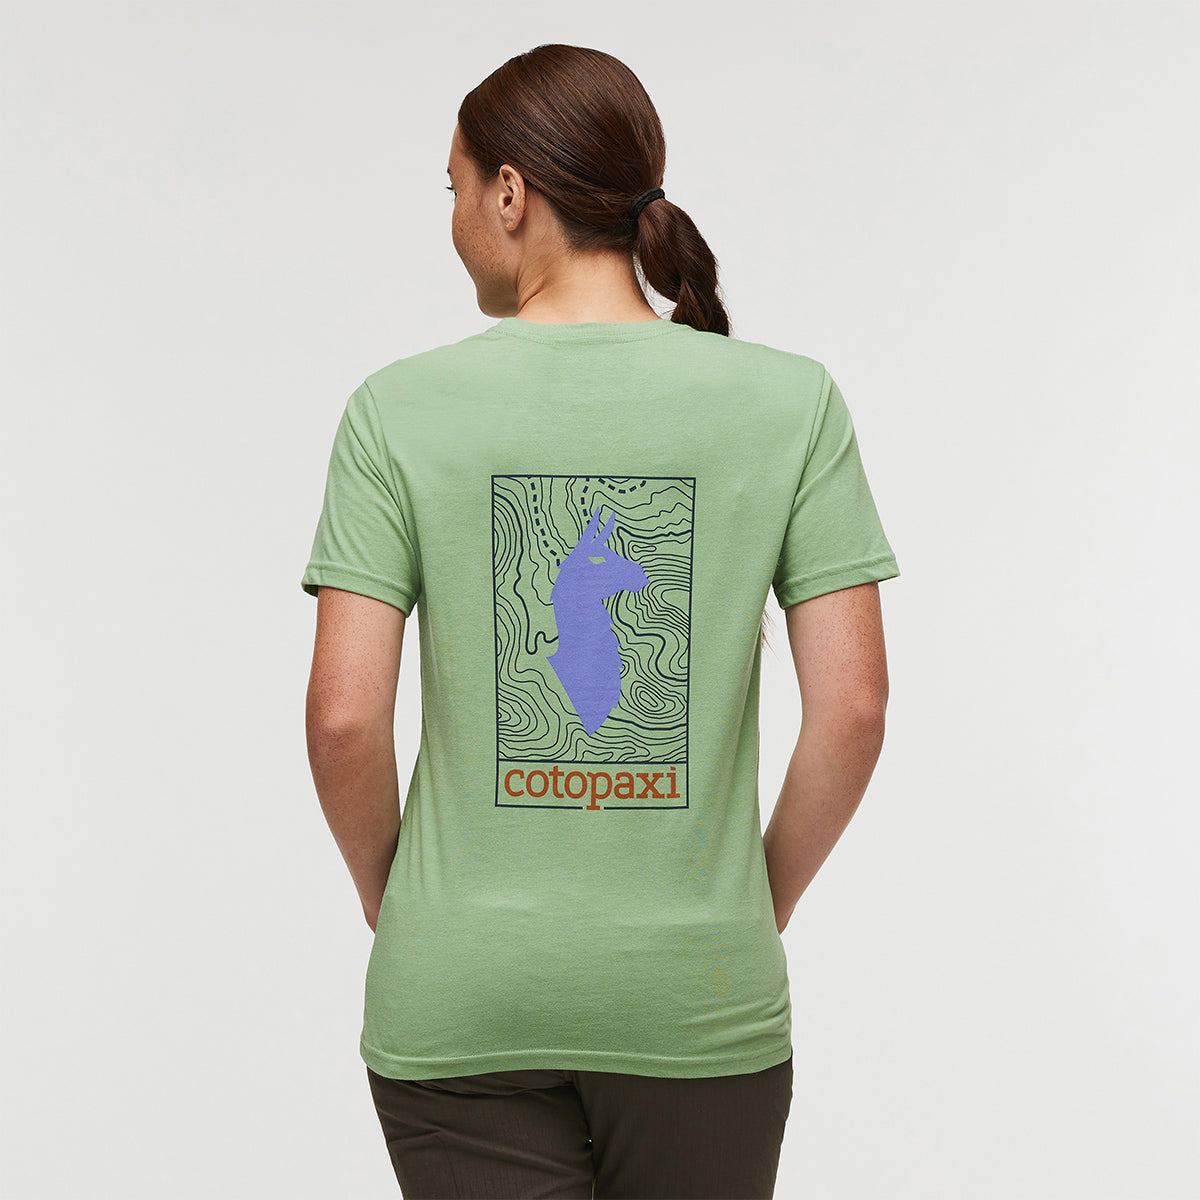 Cotopaxi Llama Map T-Shirt - WOMENS ラママップ ティーシャツ レディース